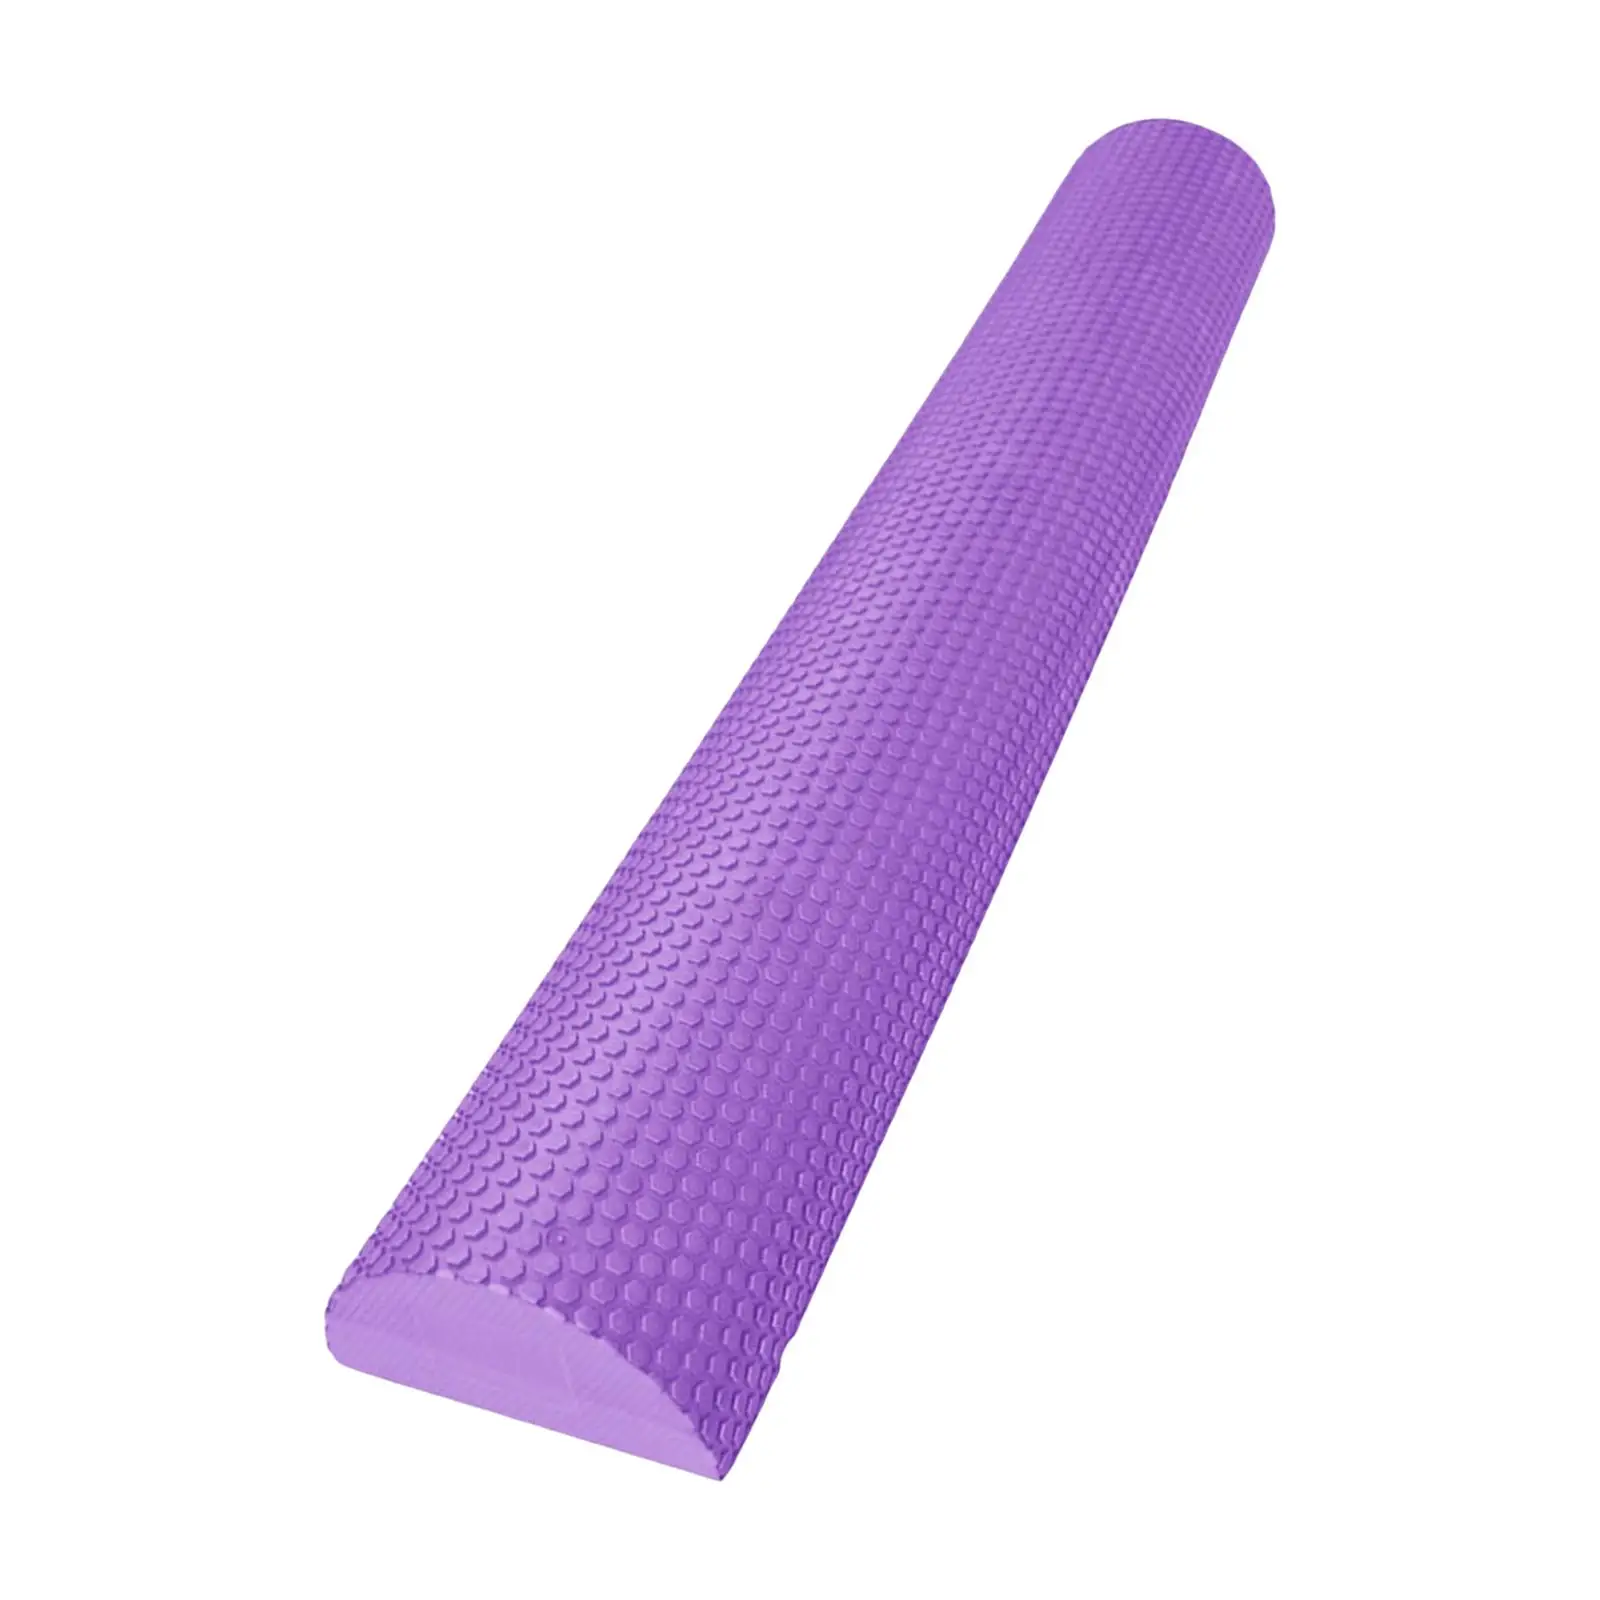 Lightweight Yoga Column Roller Foam Roller Muscle Massage Balance Training Equipment Muscle Roller for Workout Exercise Sports